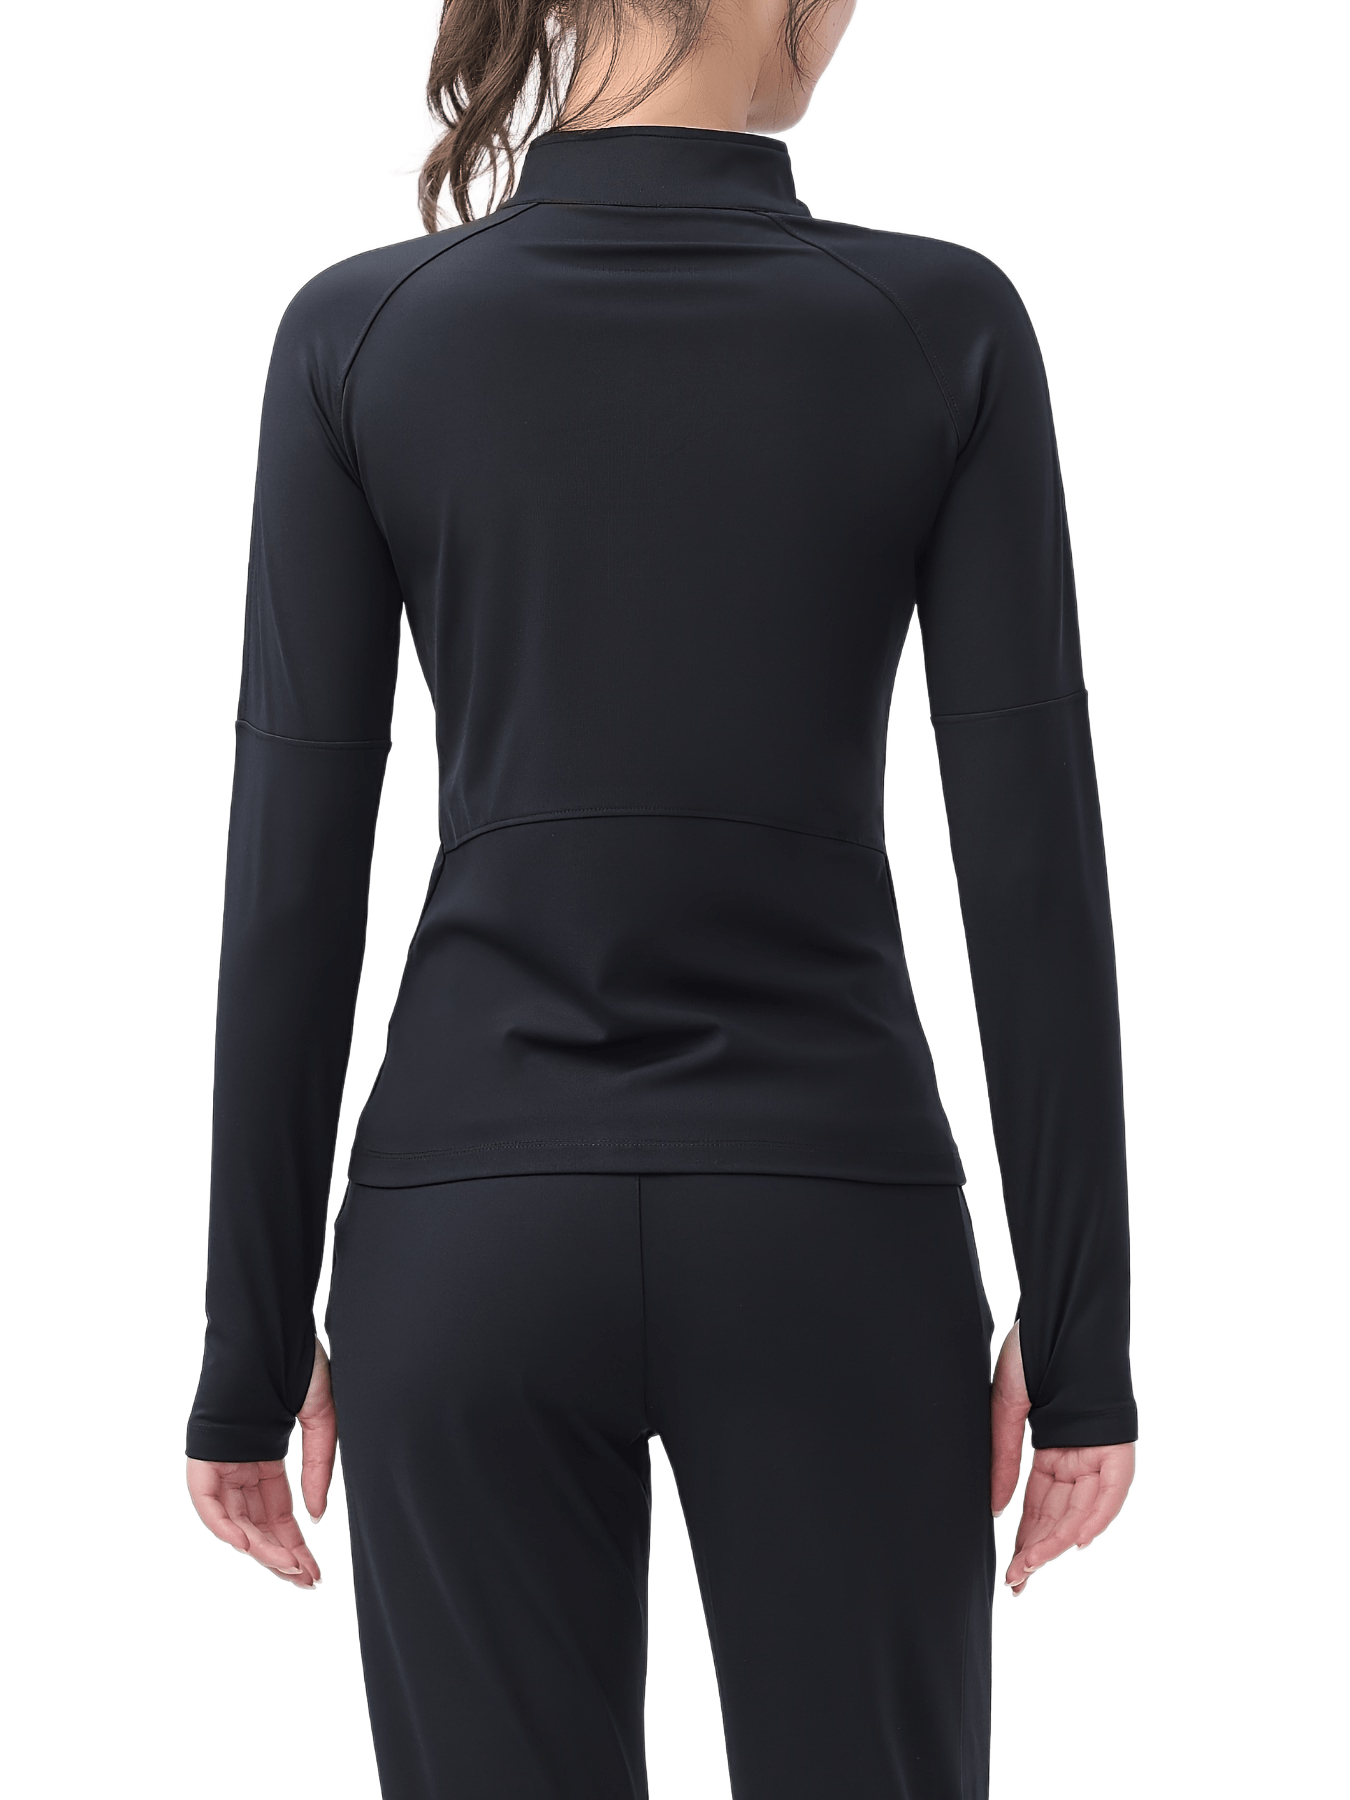 Apana Activewear 1/4 Zip Workout Top Womens Medium Long Sleeve Pullover  Running